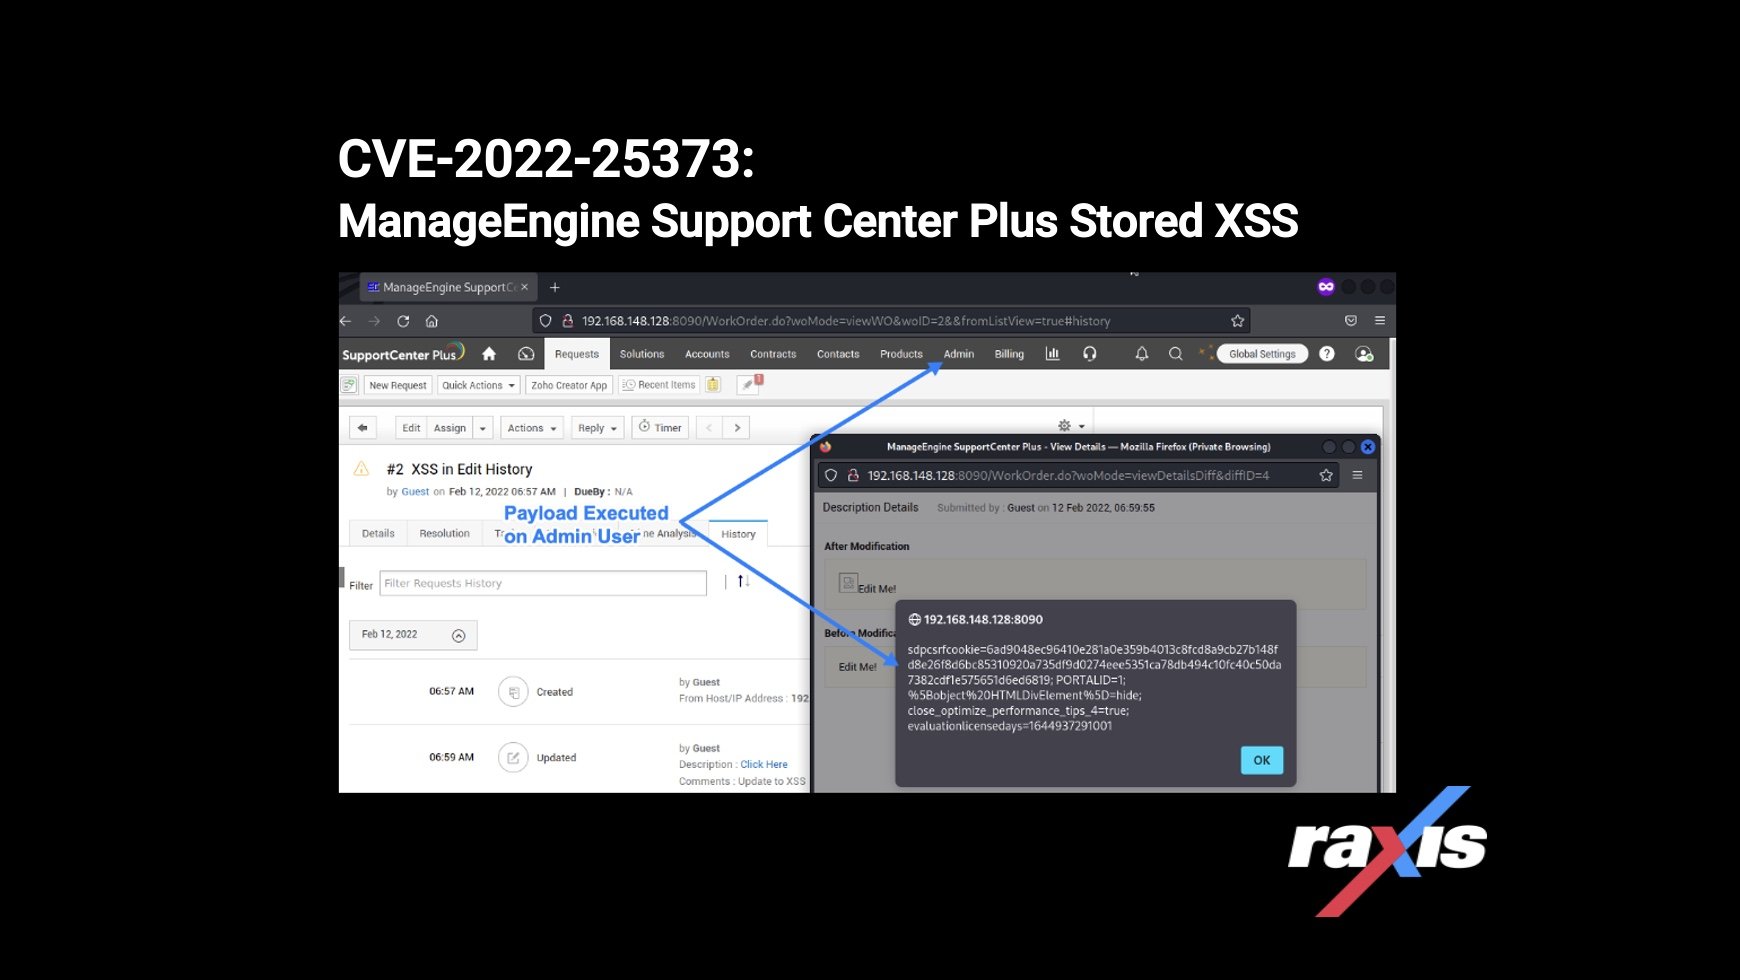 CVE-2022-25373: ManageEngine Support Center Plus Stored Cross-Site Scripting (XSS)